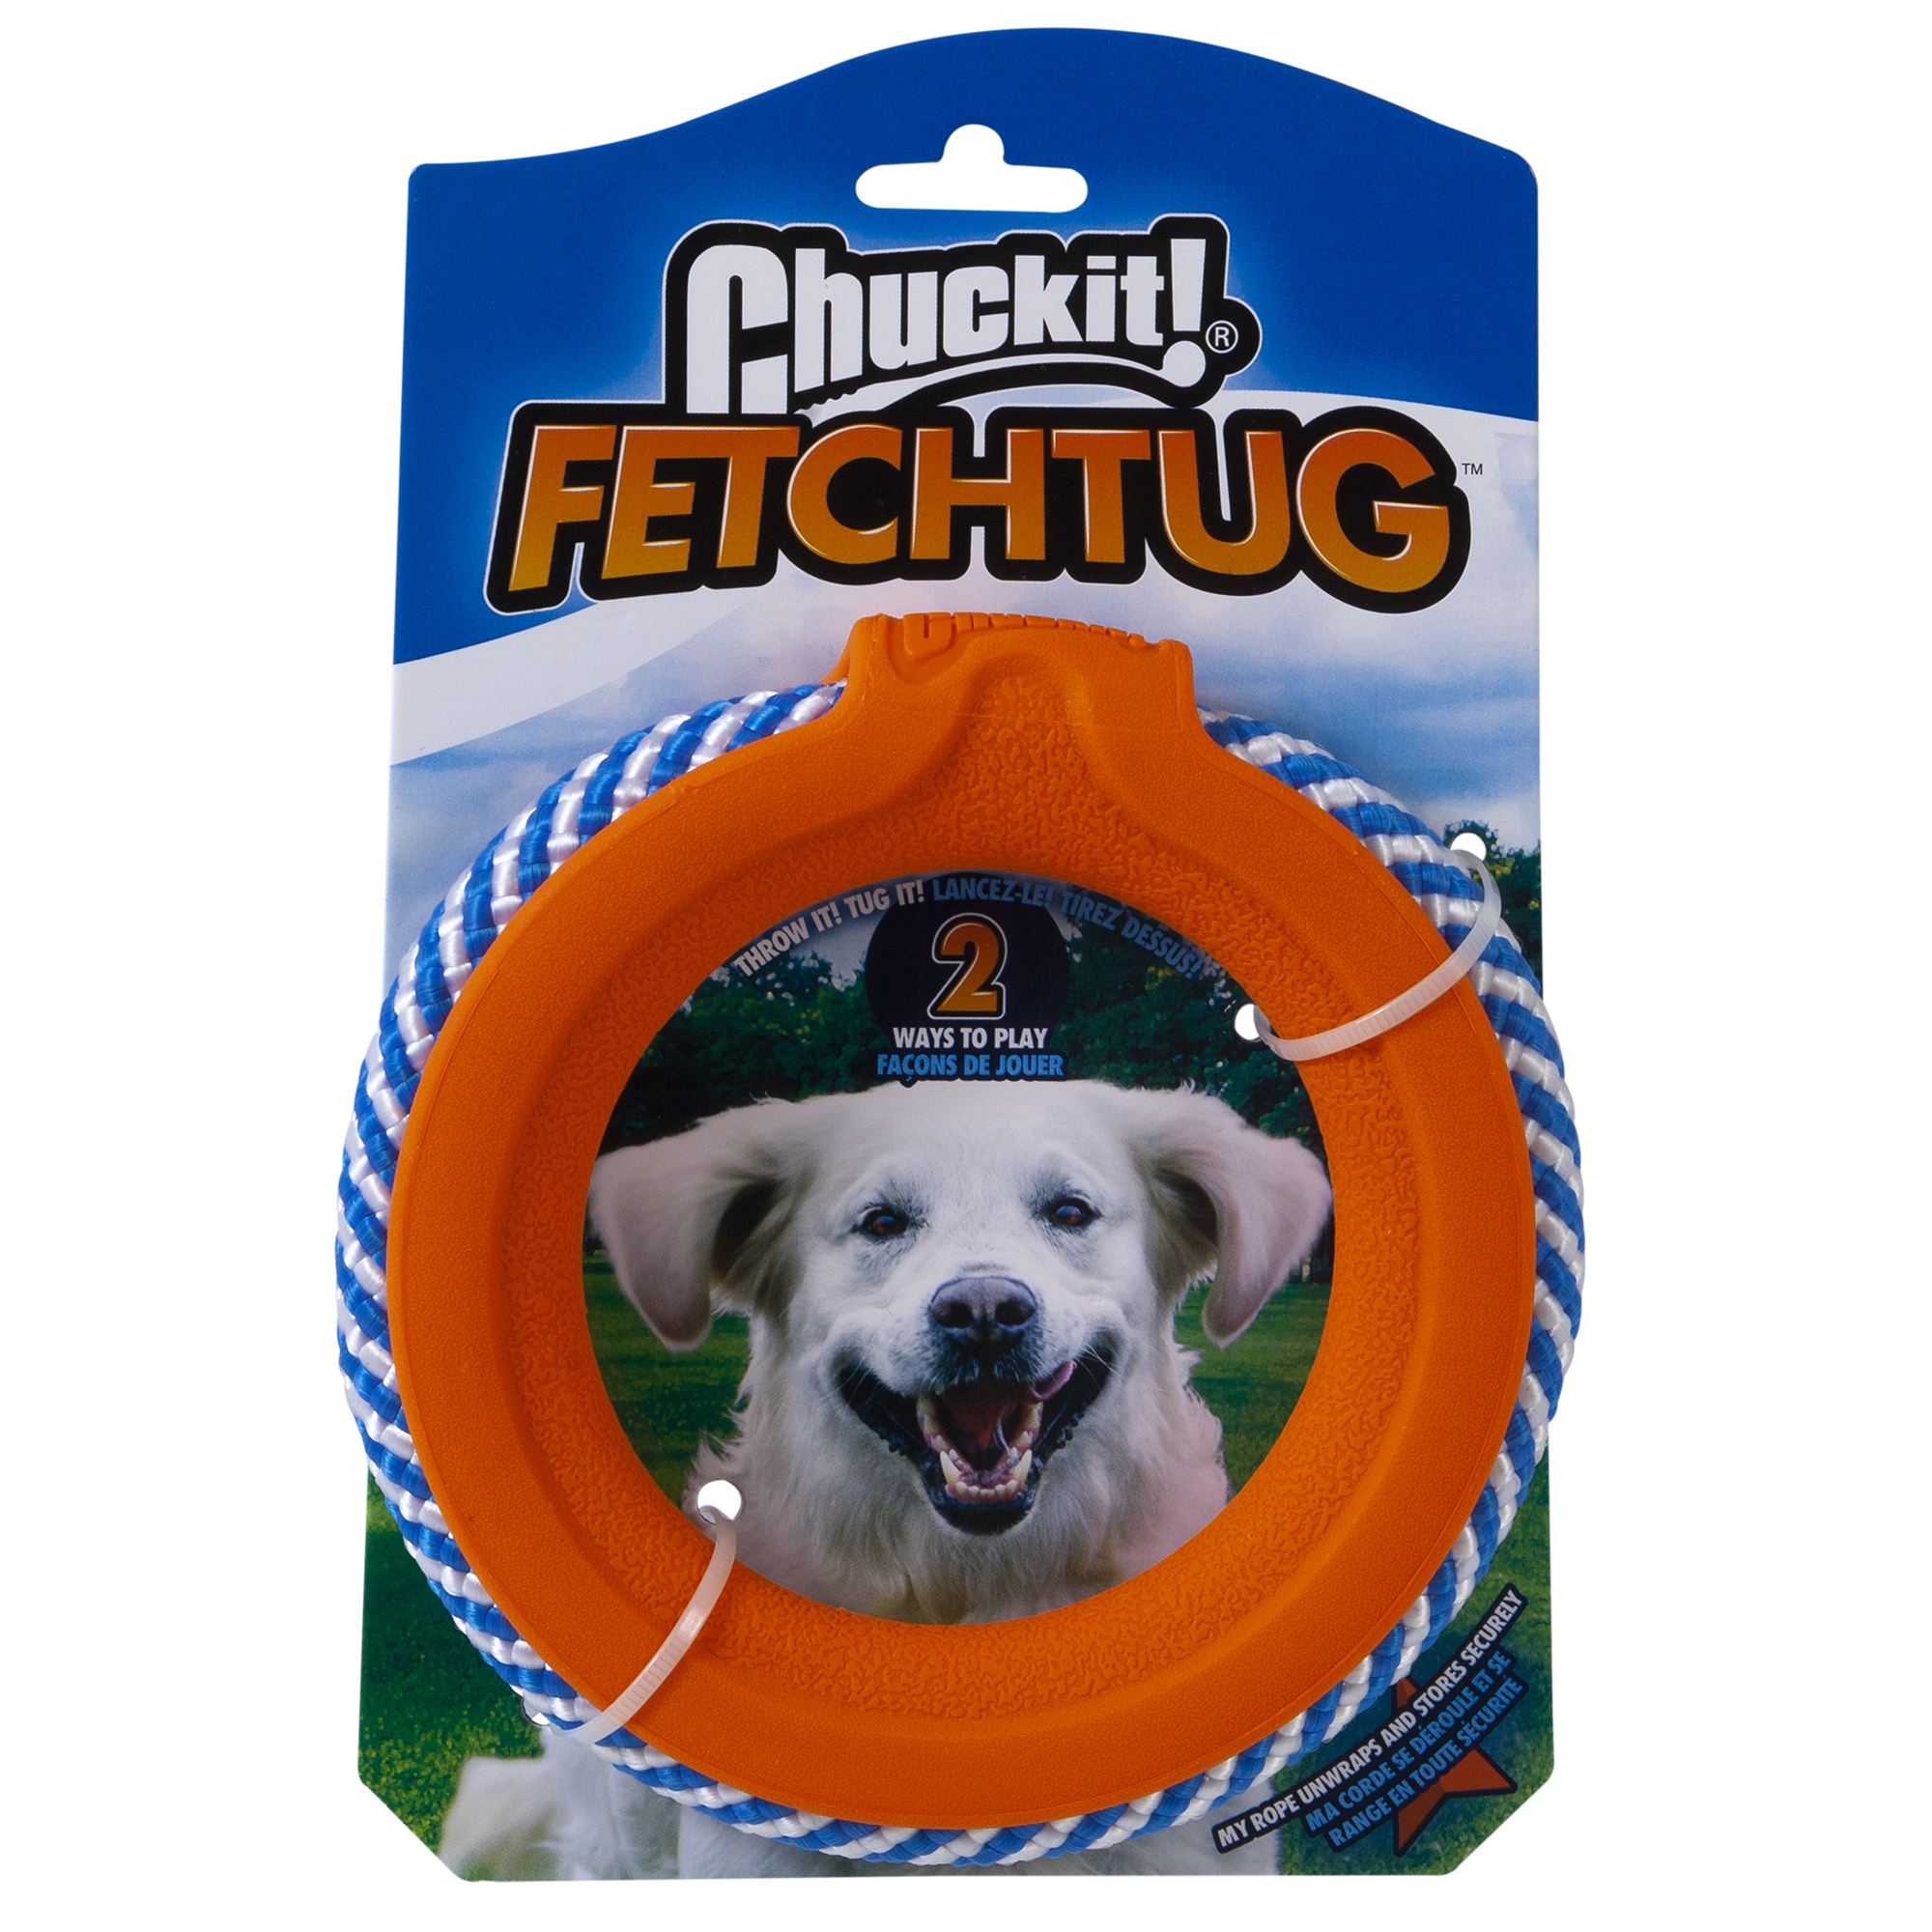 Ring Chuckit! Fetch Tug für Hunde